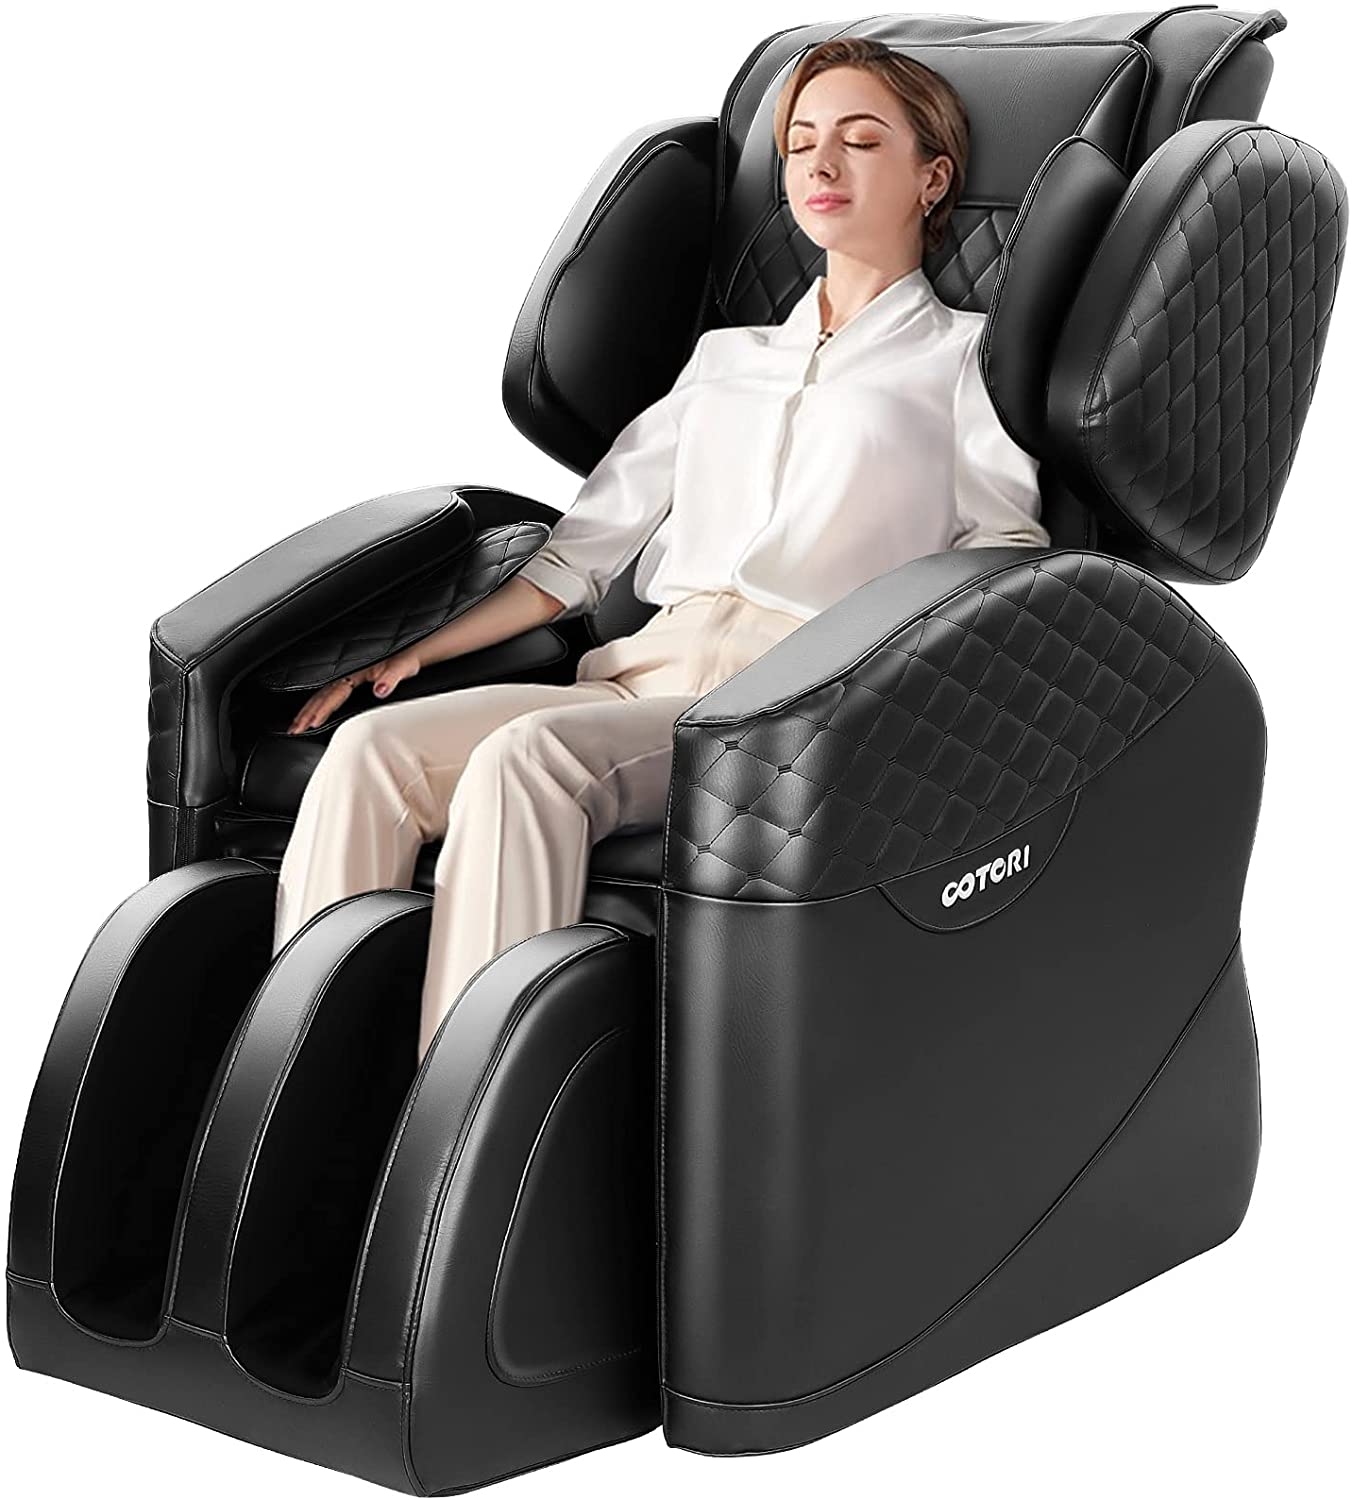 OOTORI N500Pro Massage Chair 